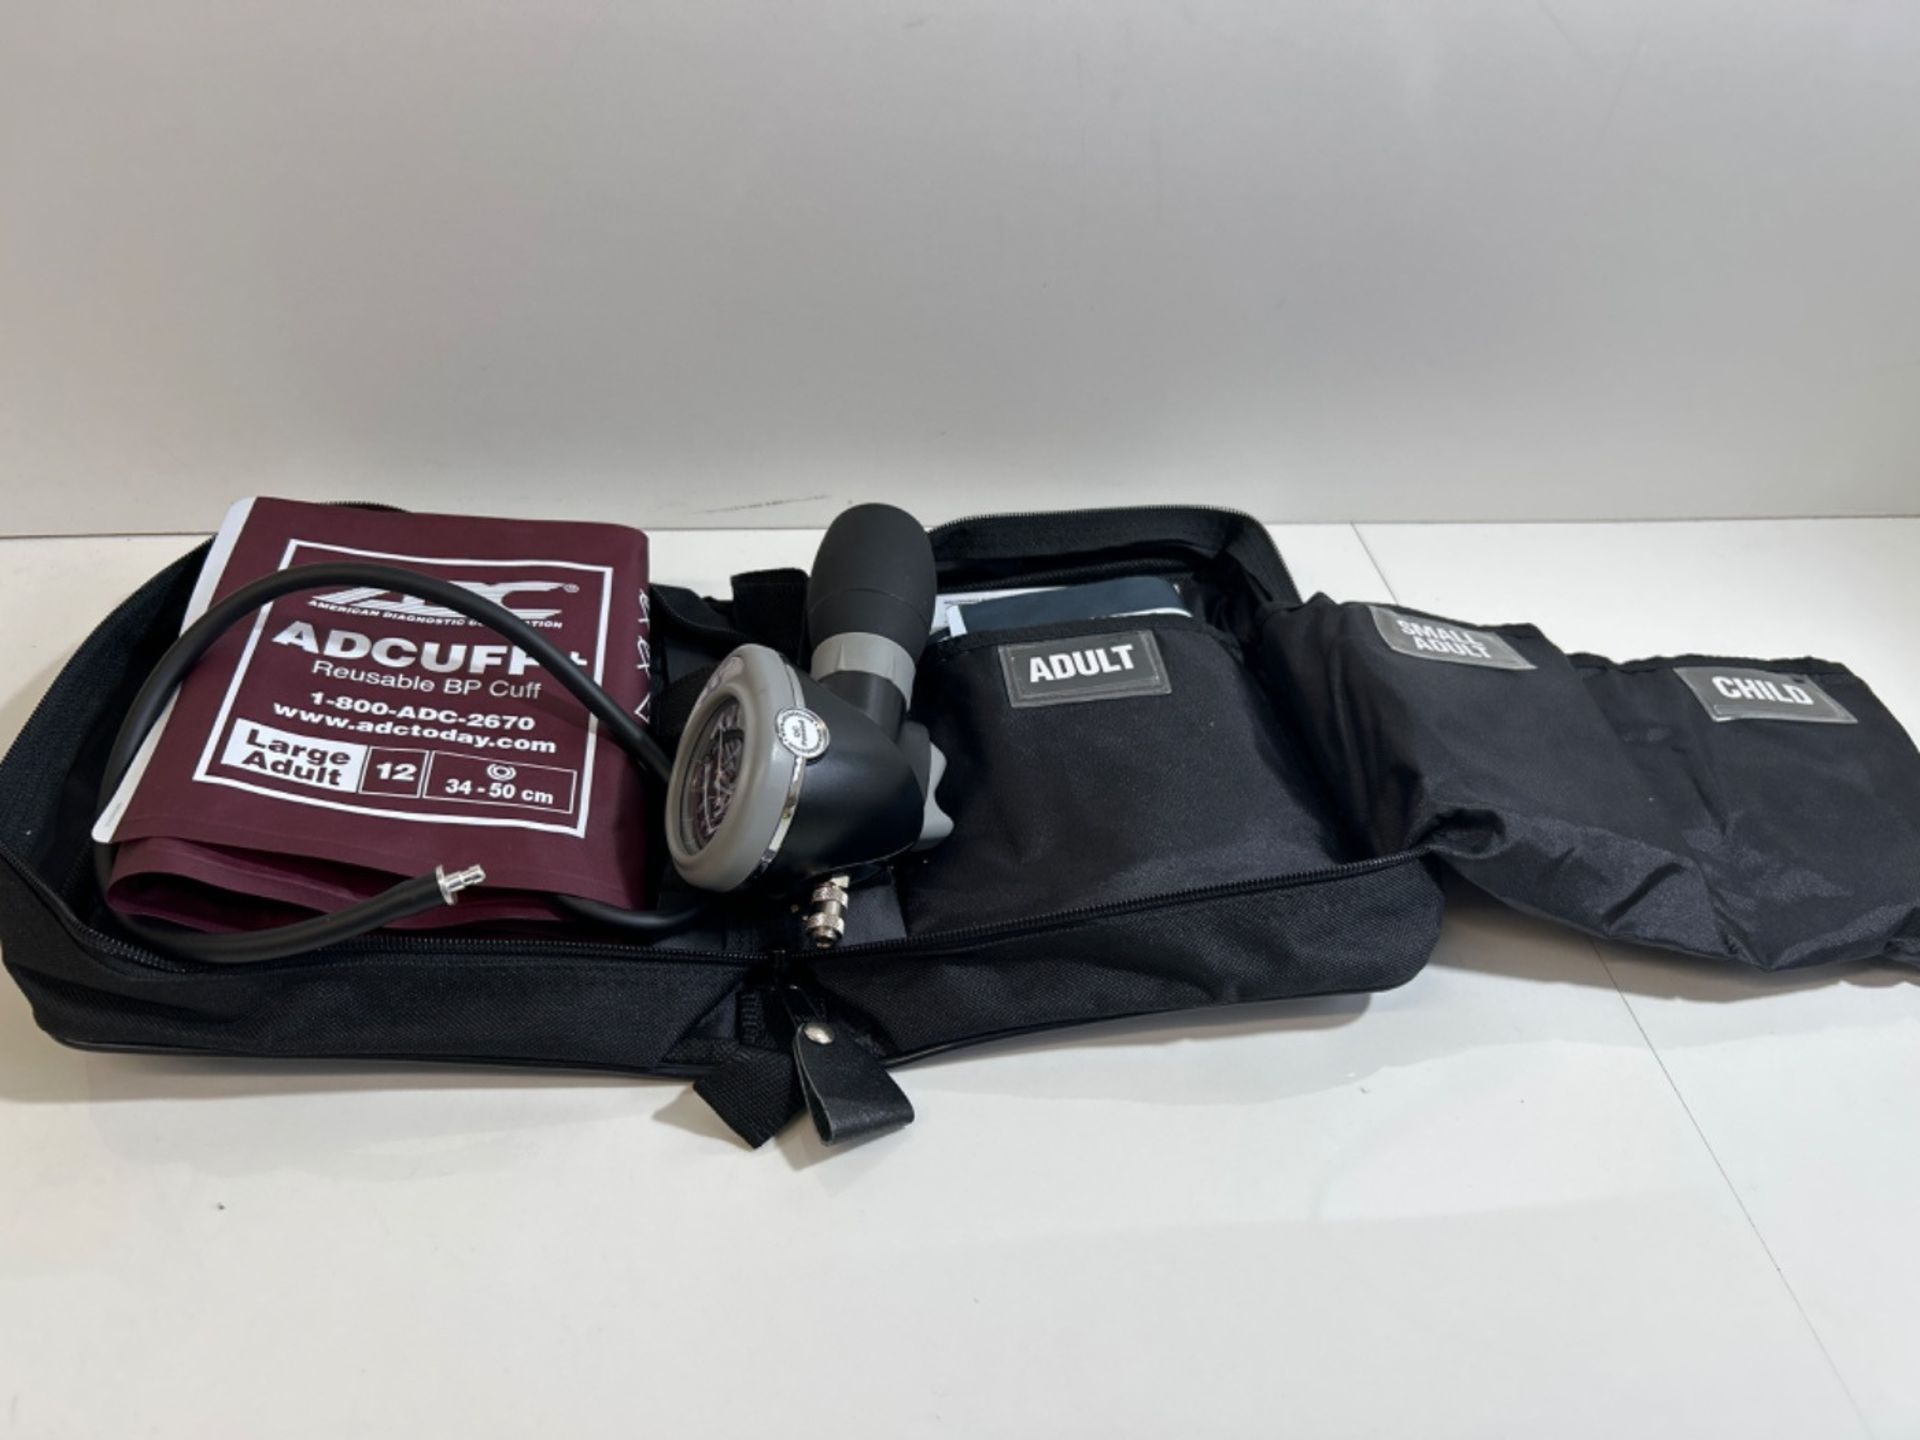 ADC Diagnotix Multikuf 732 4-Cuff EMT Kit, Professional Palm Aneroid Sphygmomanometer, Child, Small - Image 2 of 3